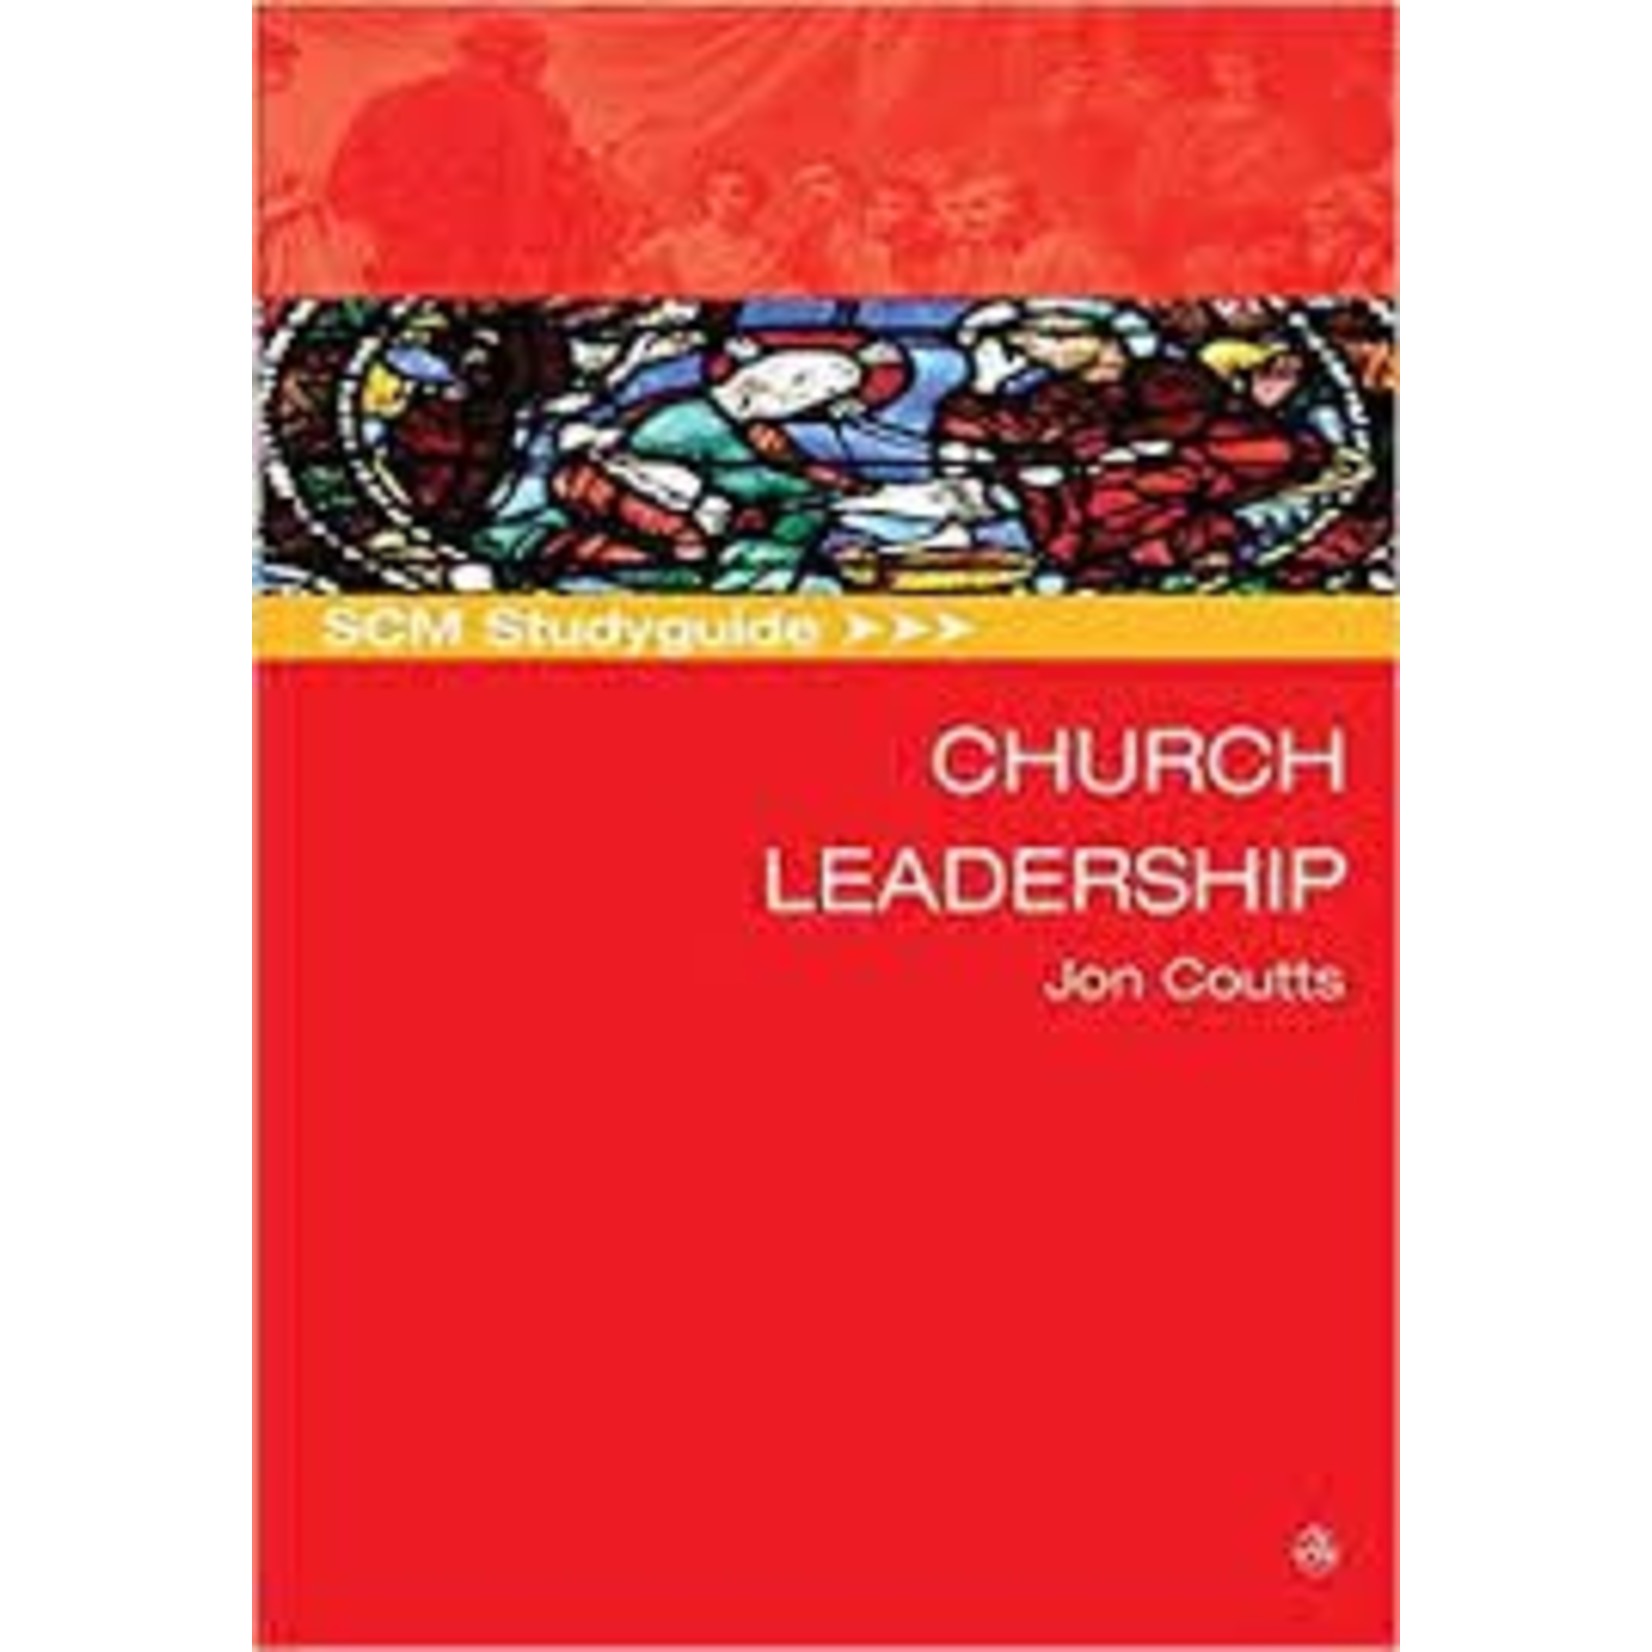 SCM Studyguide: Church Leadership -  Jon Coutts